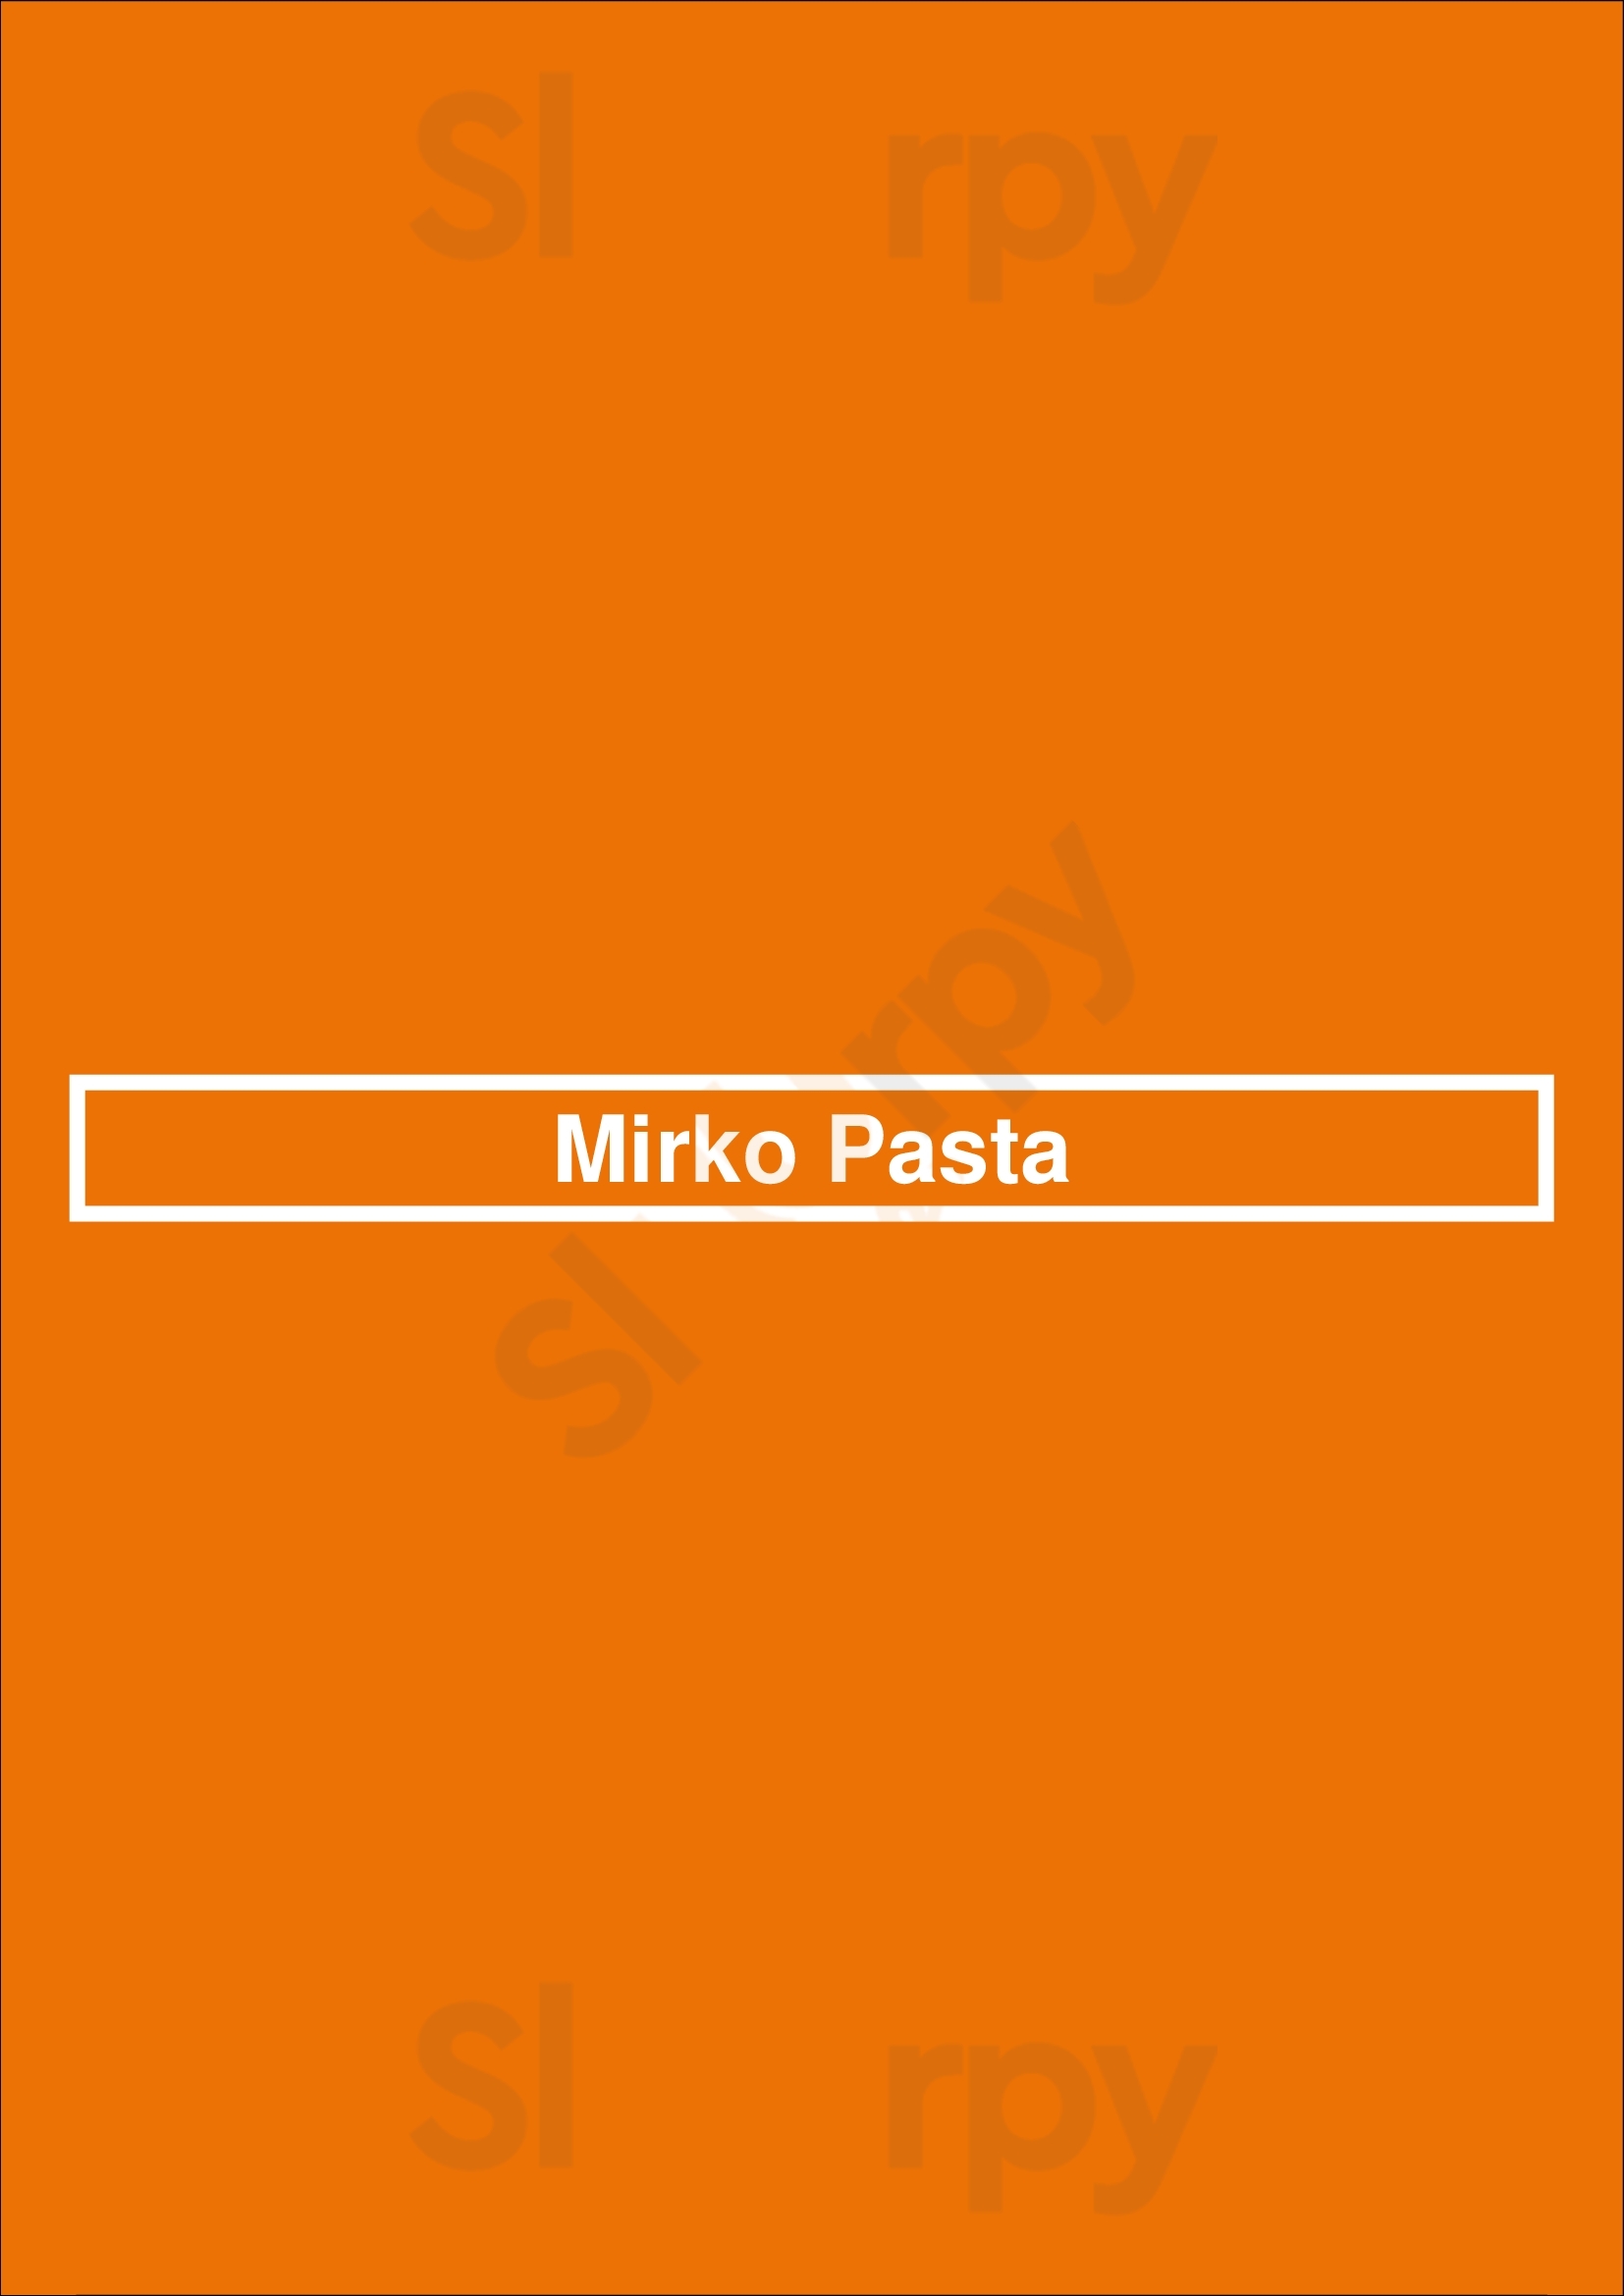 Mirko Pasta Nashville Menu - 1